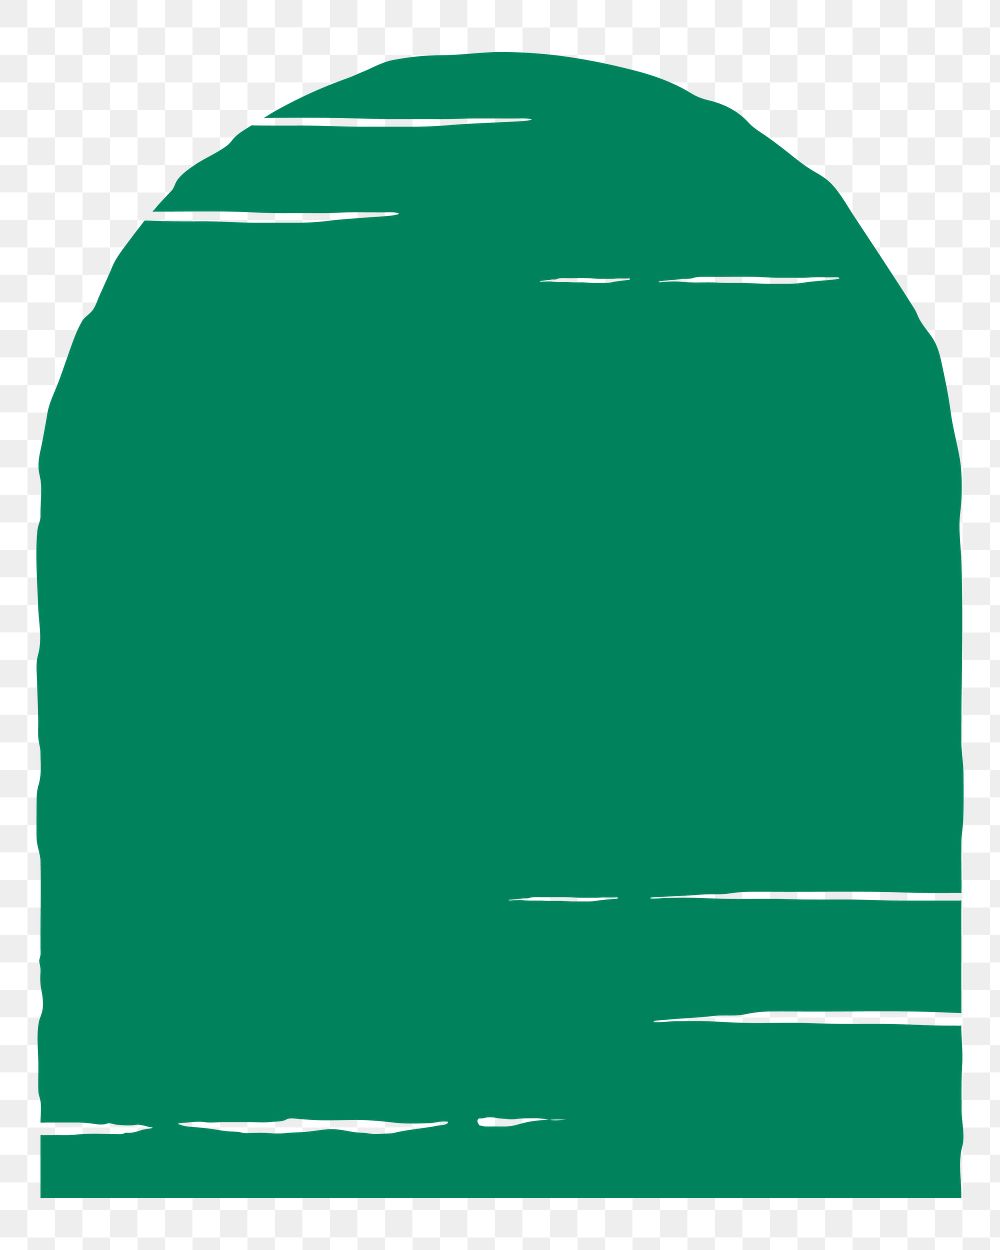 Green arch shape png sticker, transparent background